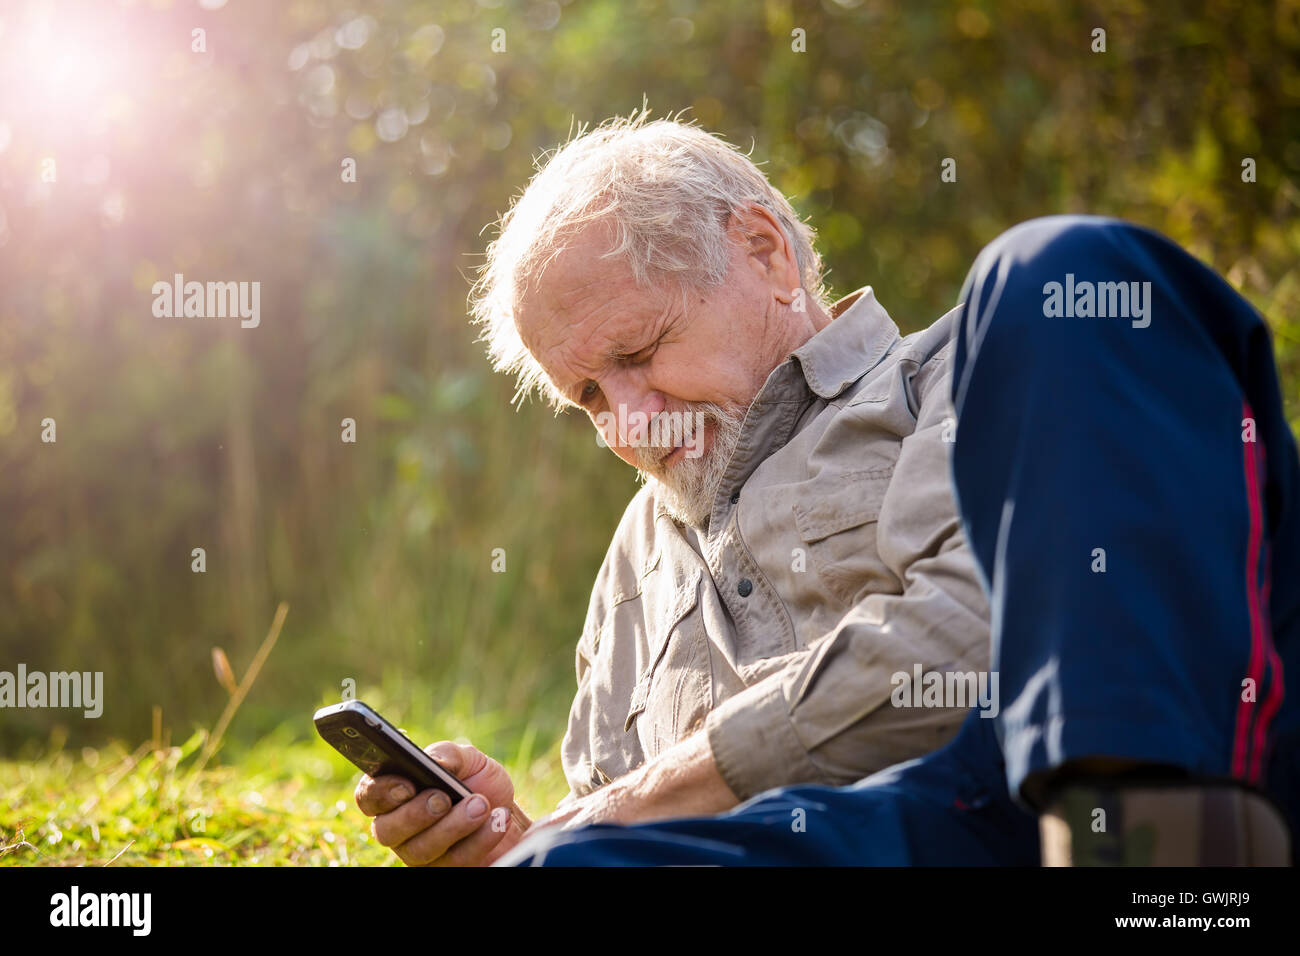 Кастинг старика. Дедушка с телефоном. Телефон для Стариков. Дедушка пенсионер. Дедуля с телефоном.